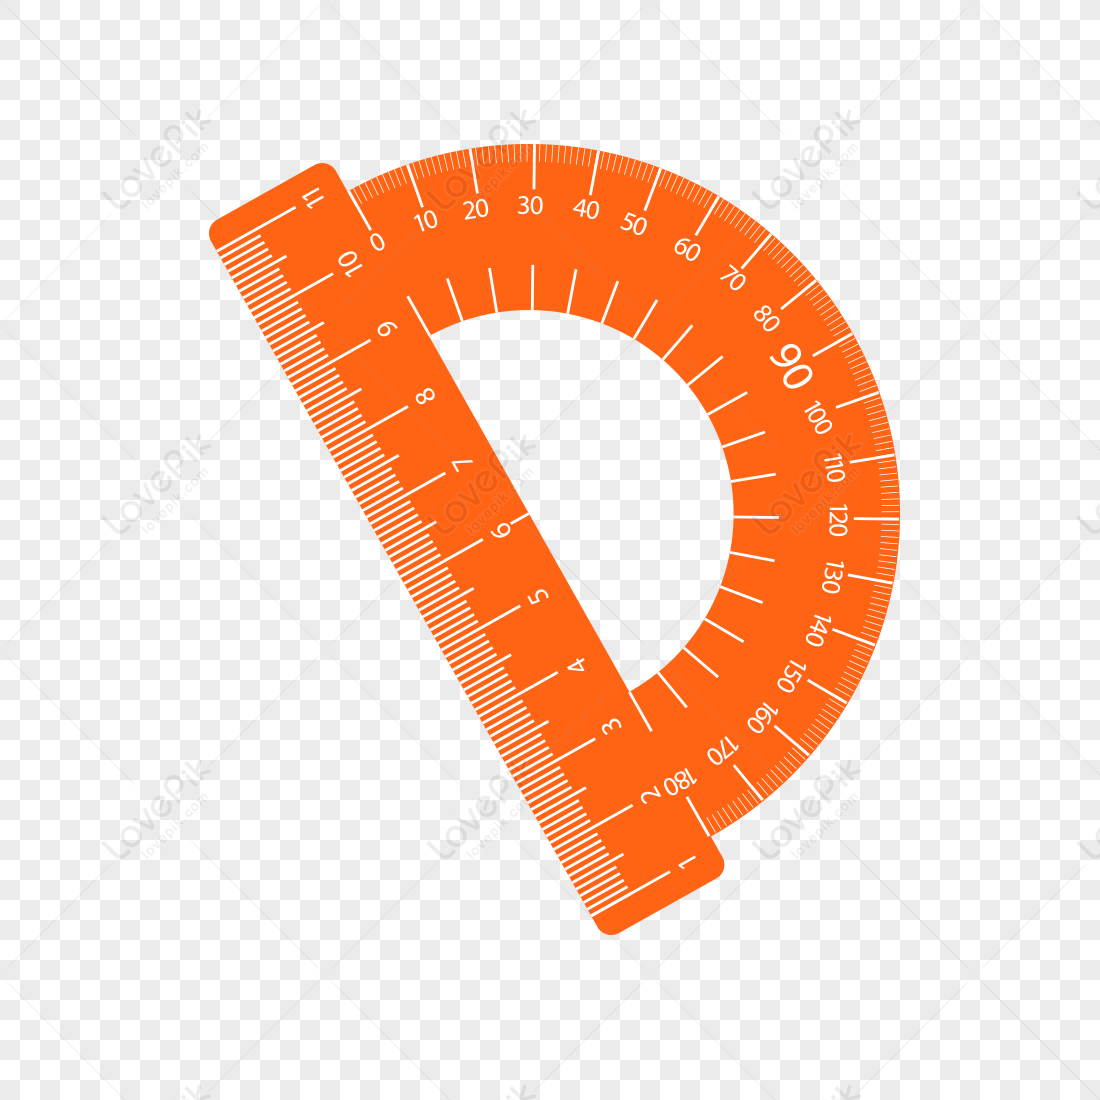 protractor-orange-shapes-math-shapes-measuring-ruler-png-image-free